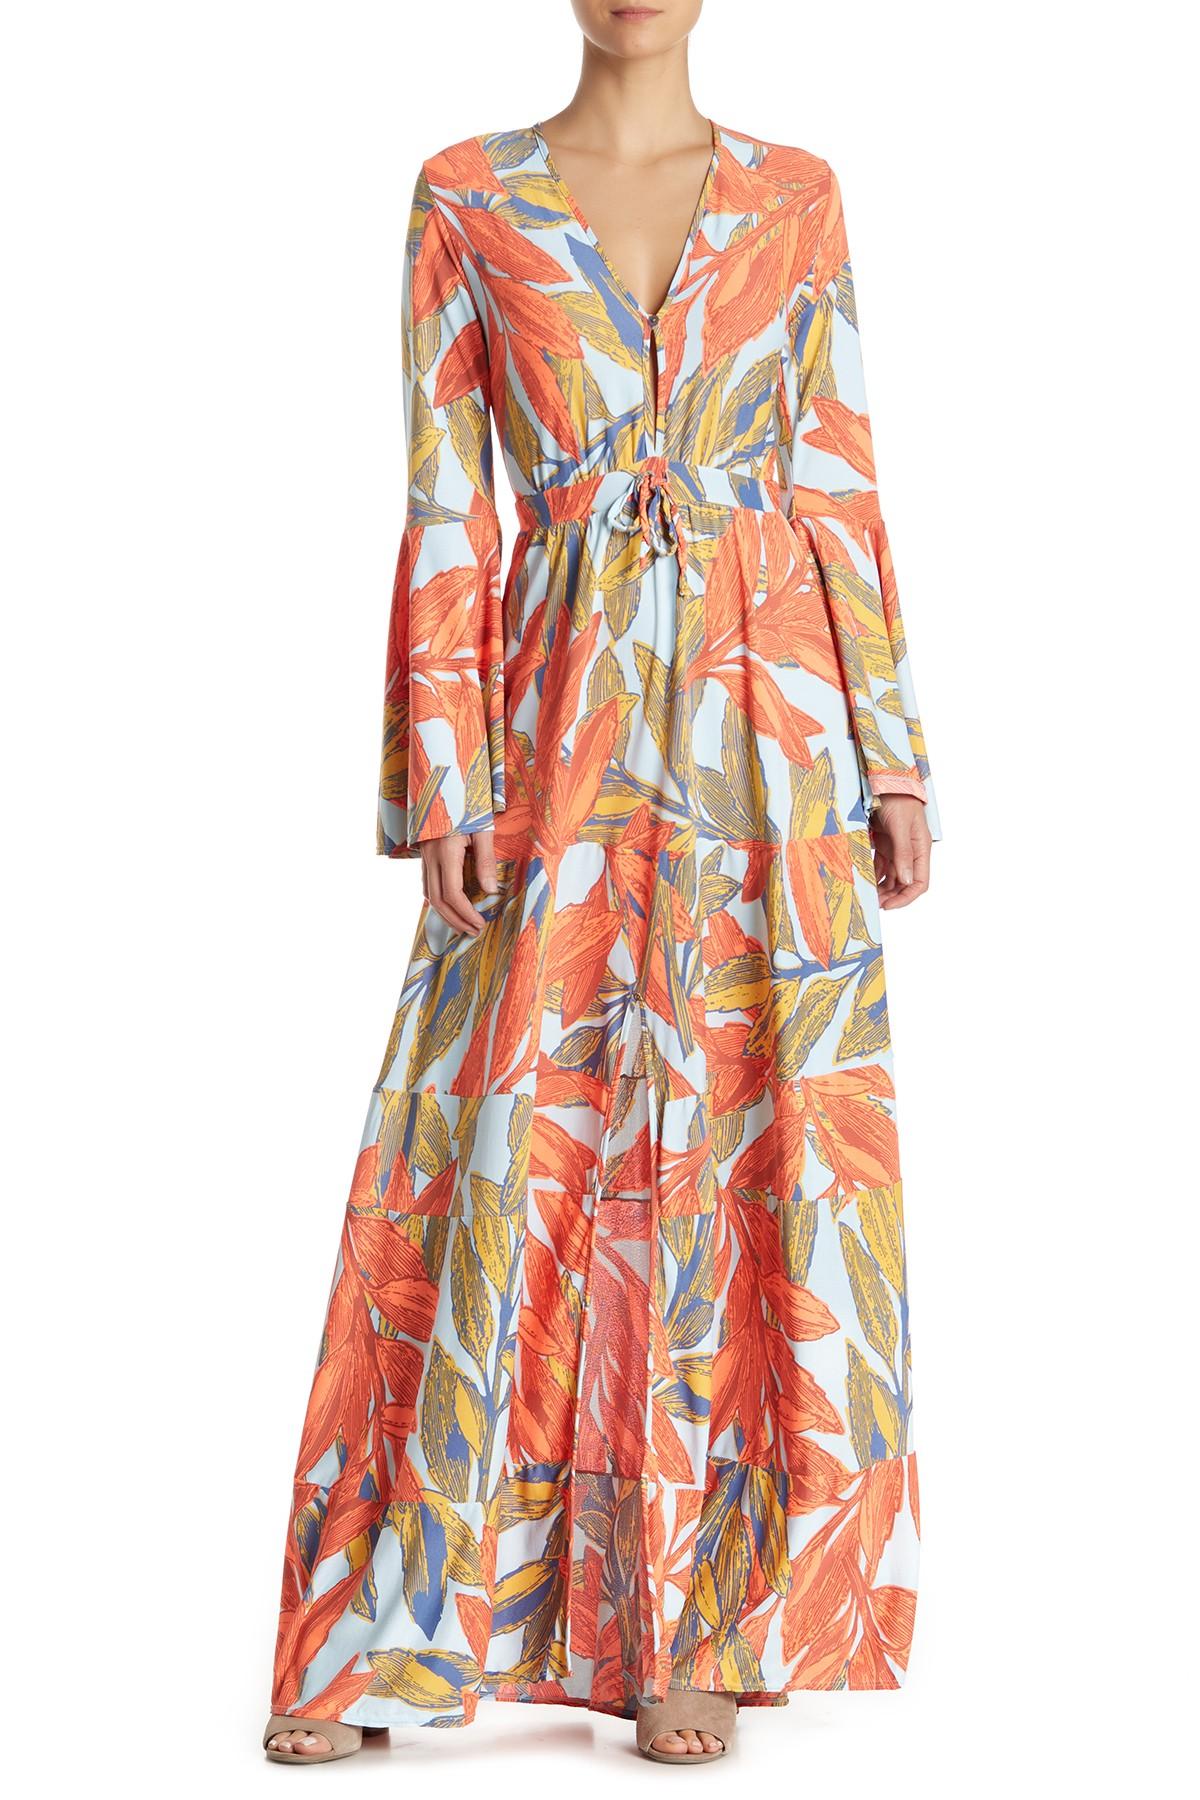 Maaji Tropical Print Bell Sleeve Cover-up Maxi Dress in Orange - Lyst